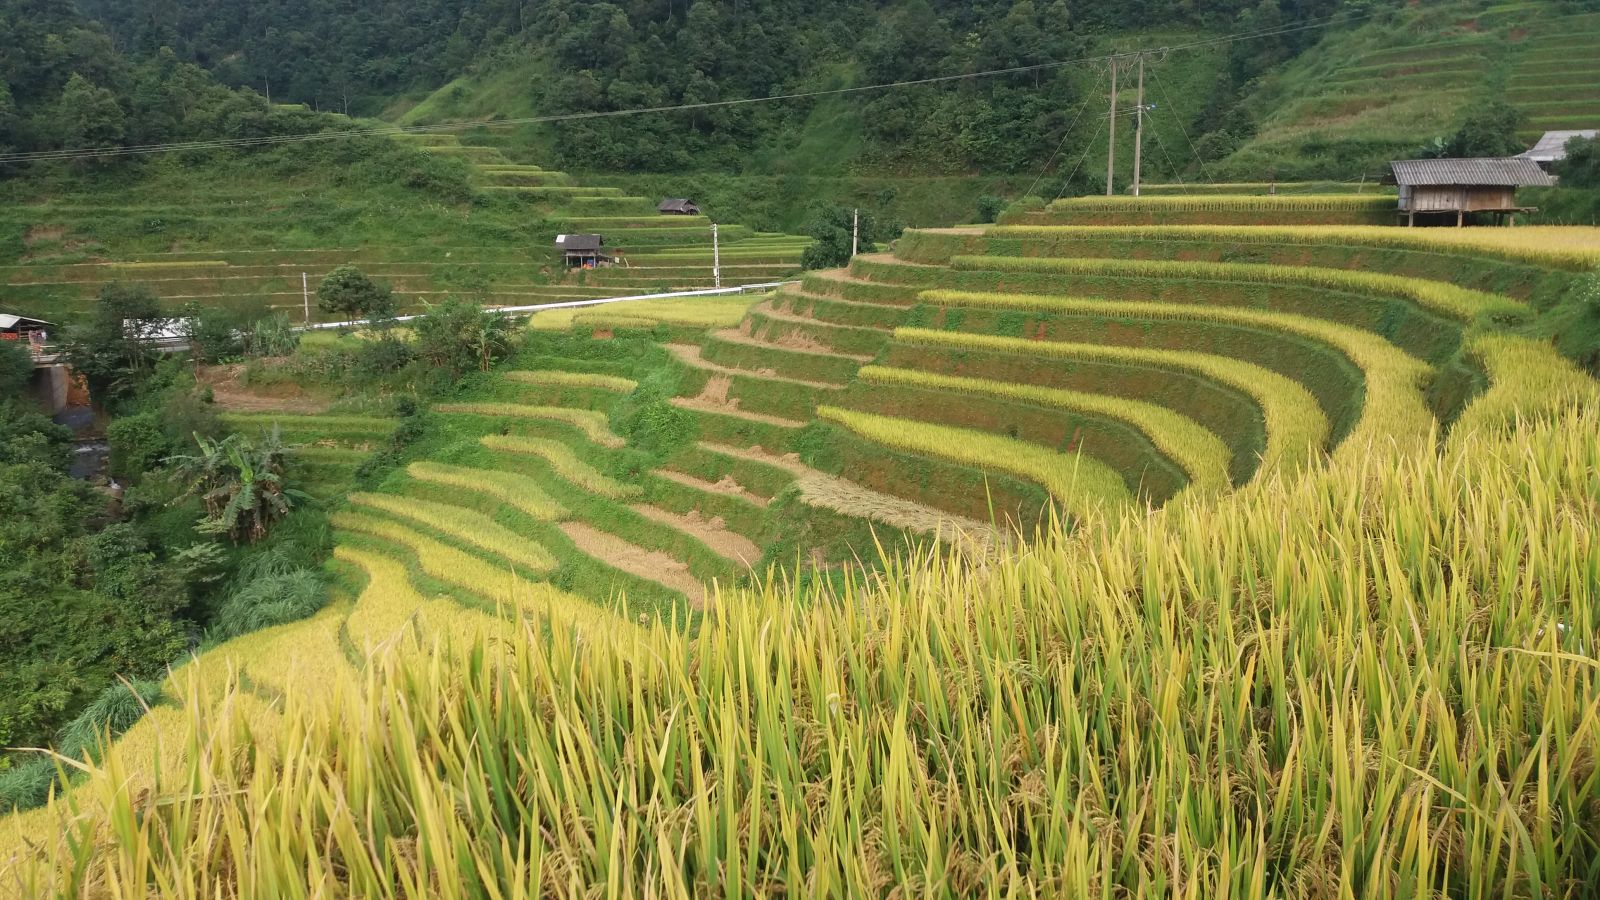 Muong Hoa rice terrace fields